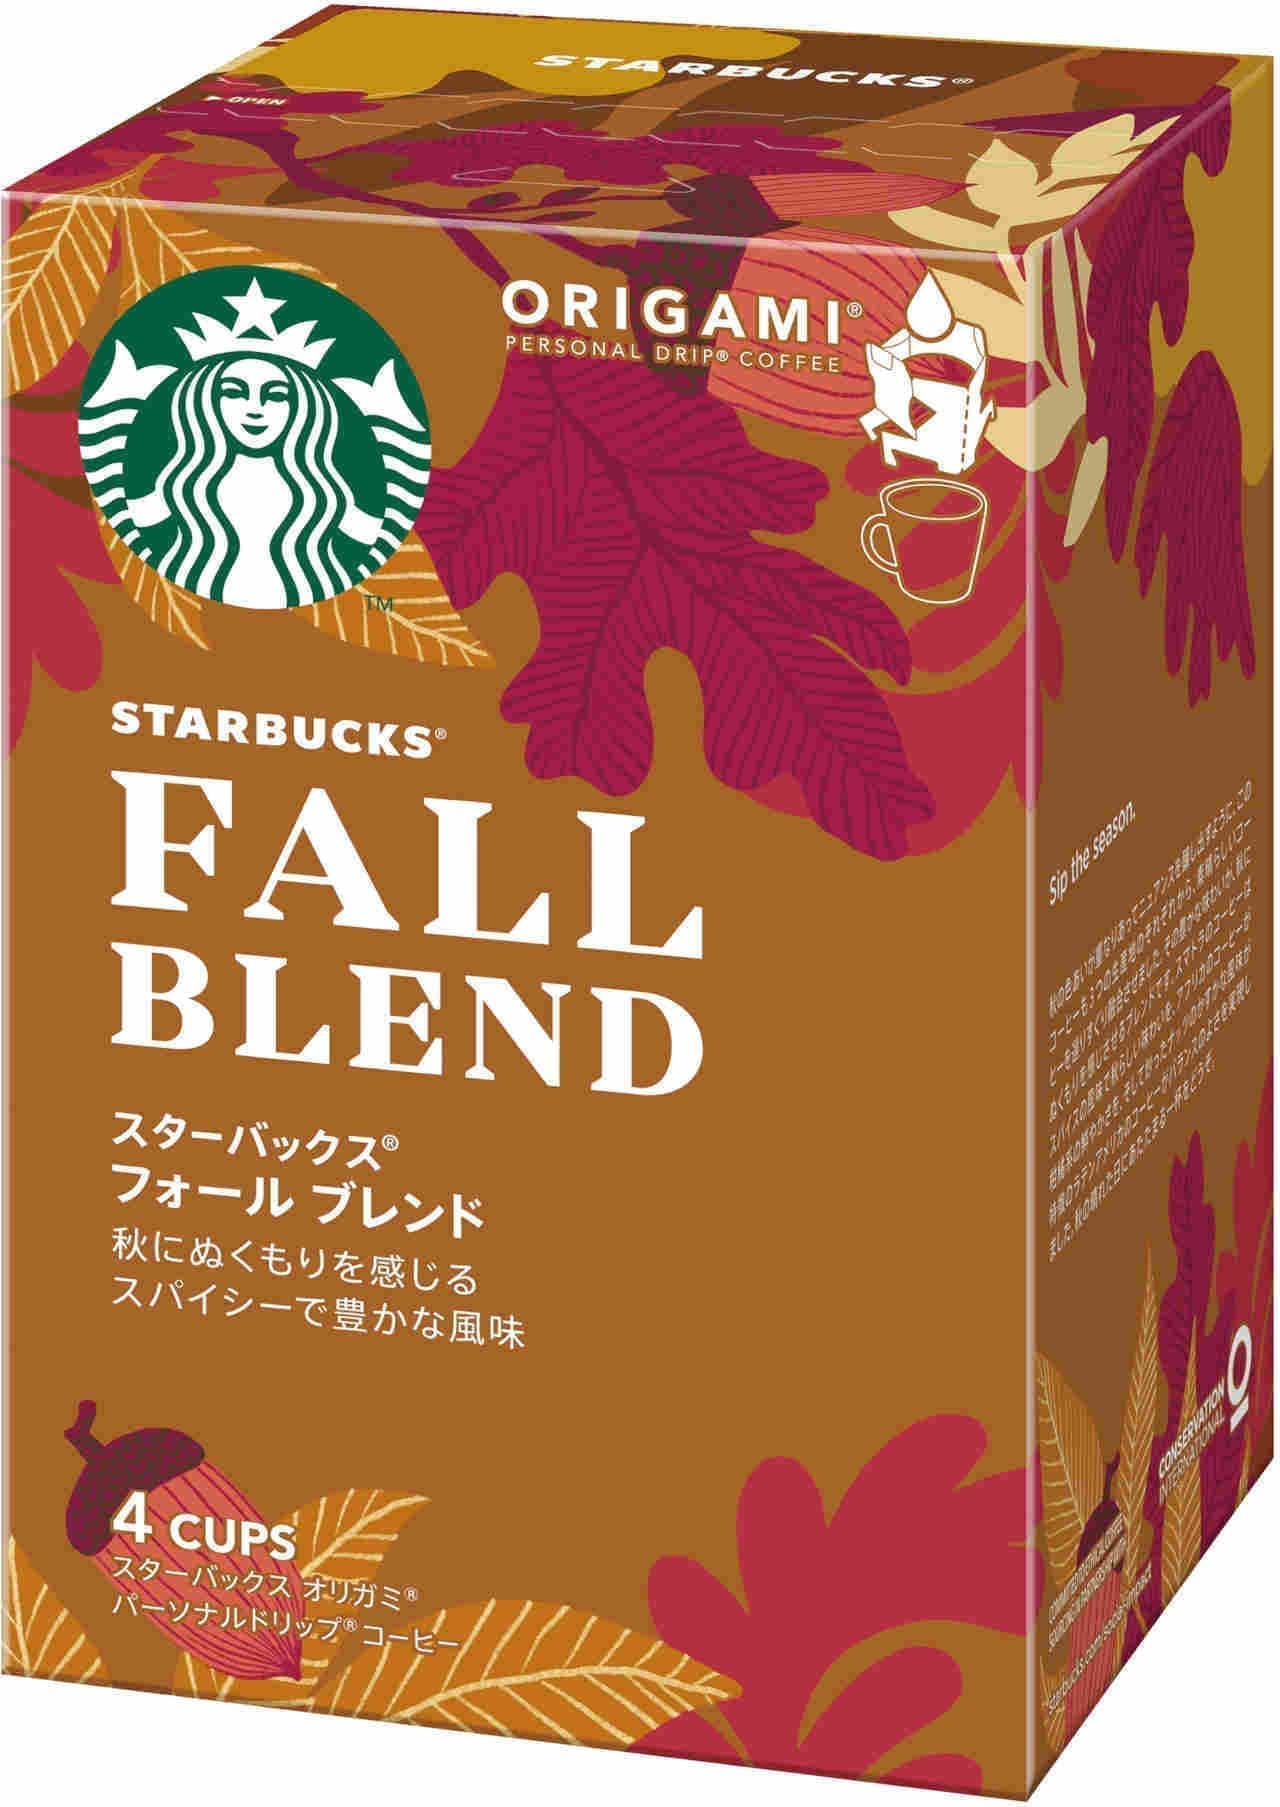 Nestle Japan "Starbucks Seasonal Collection Fall"